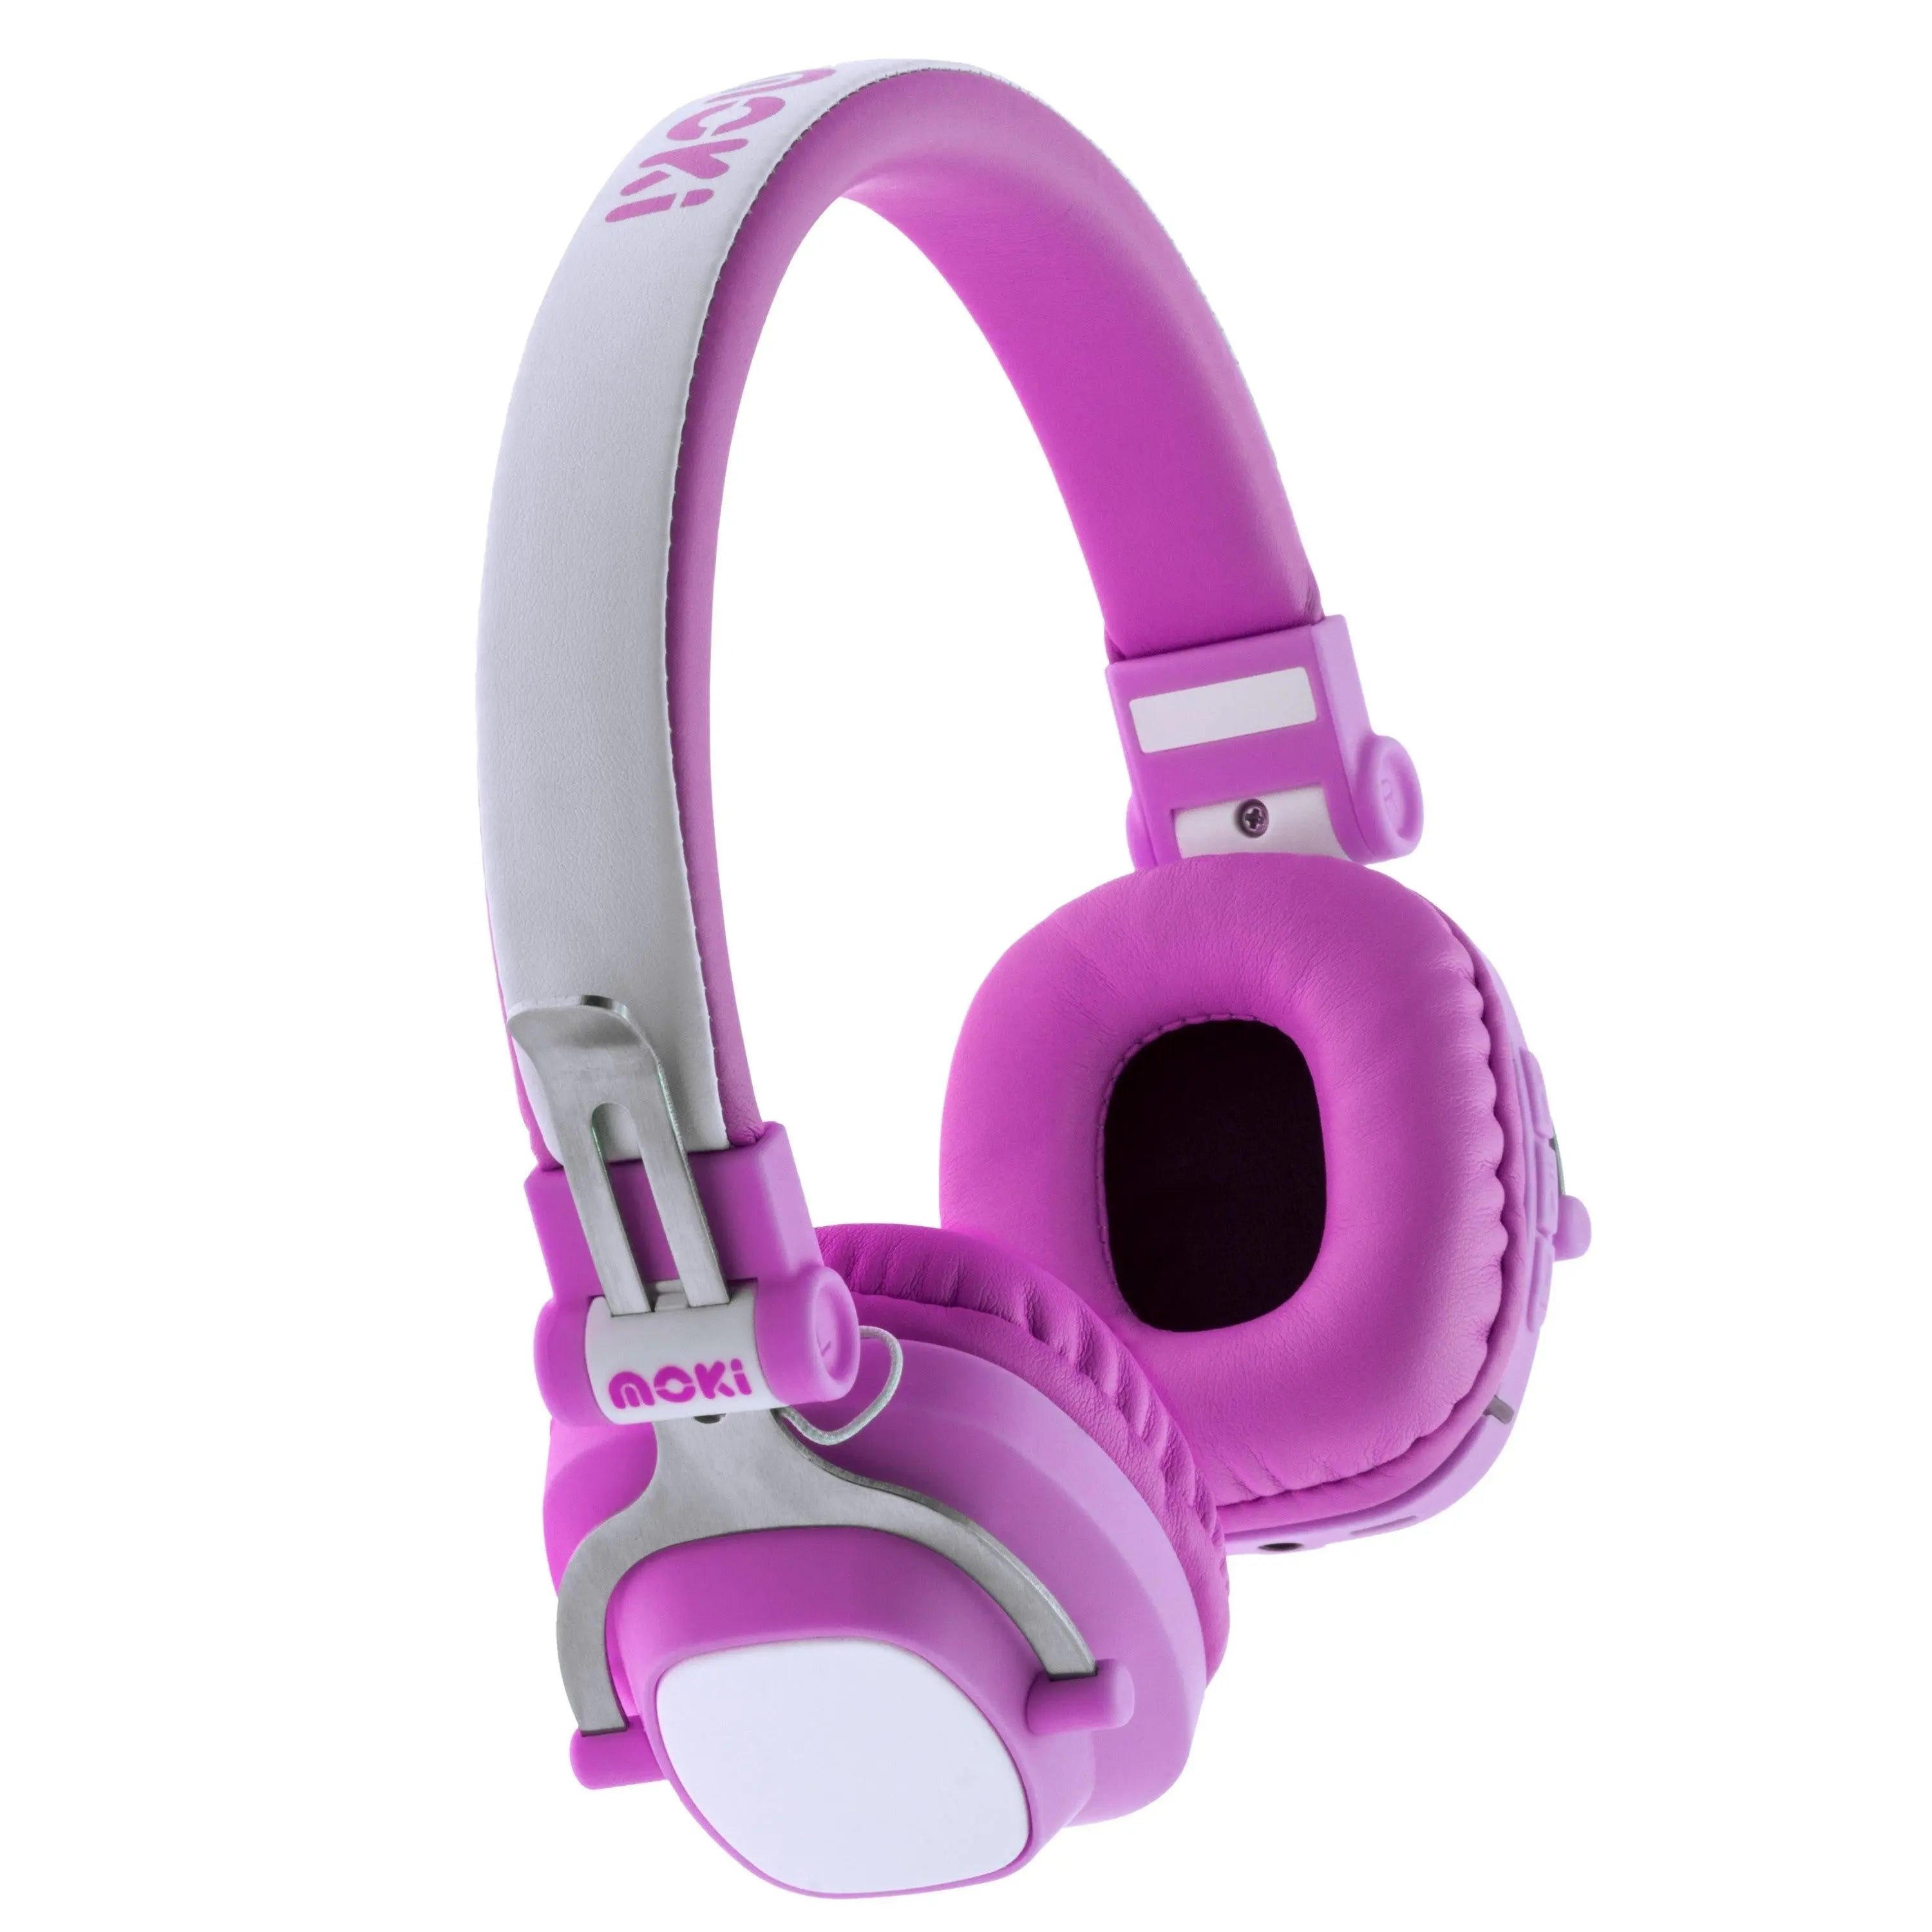 MOKI Exo Kids Bluetooth Headphone - Pink MOKI